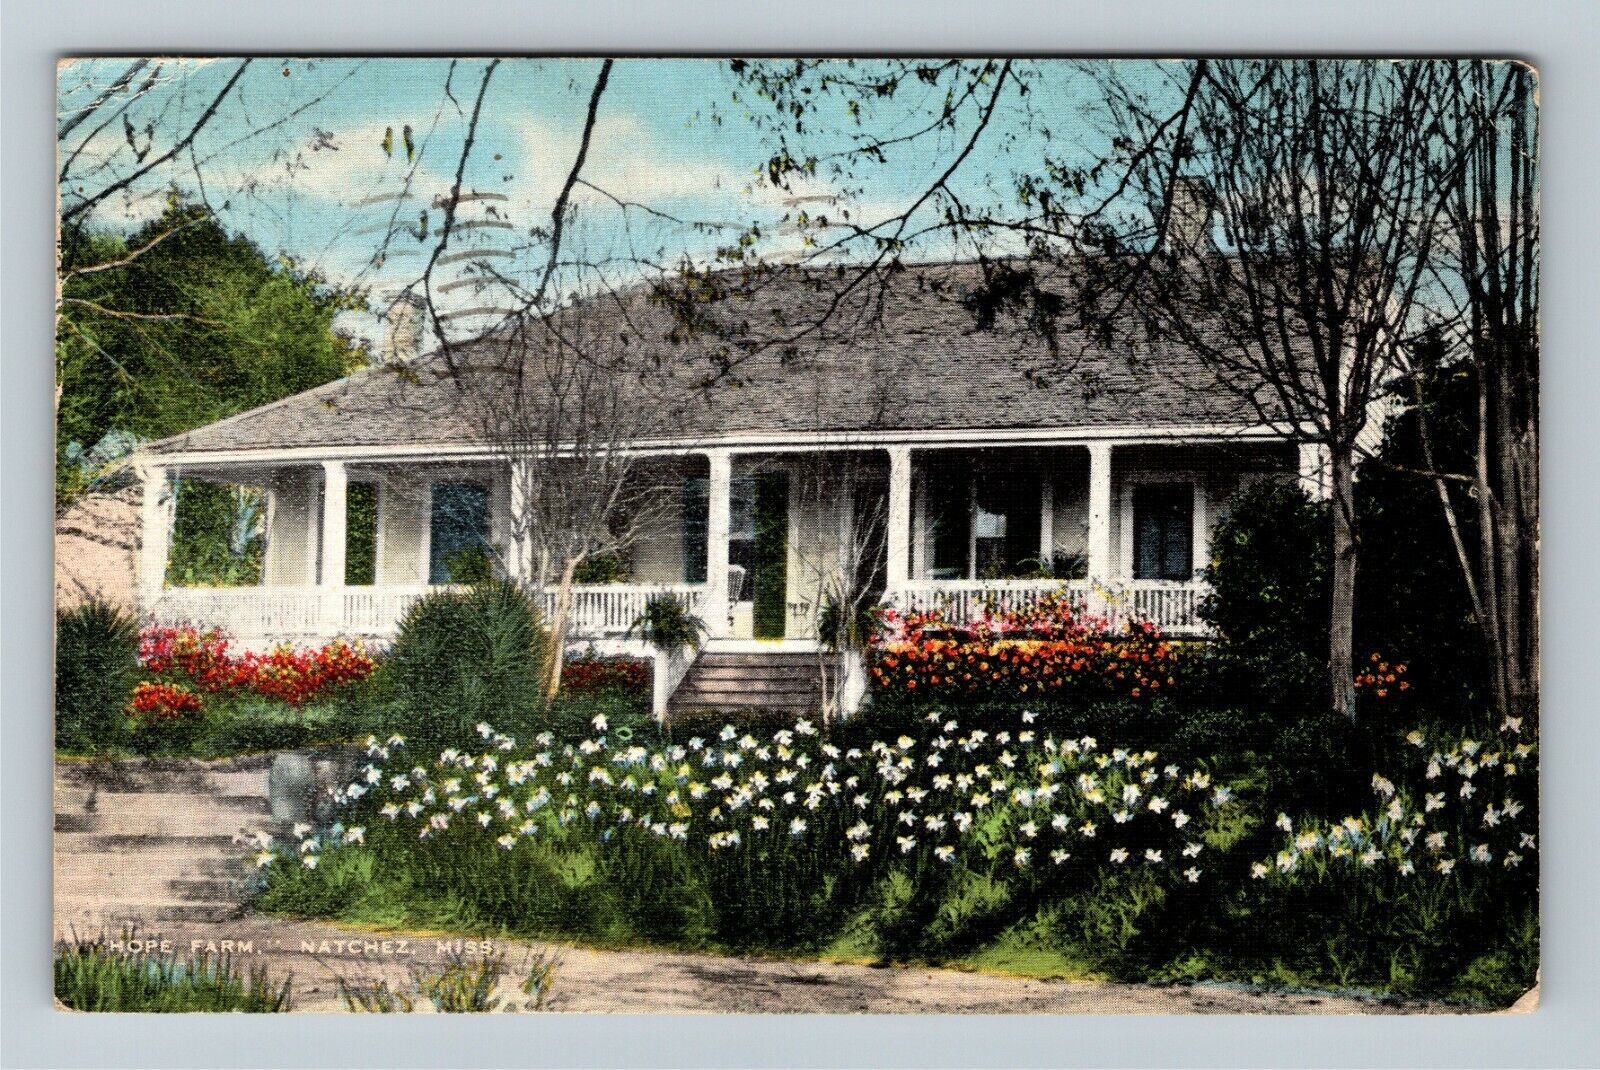 Natchez MS-Mississippi, Historic 1775 Hope Farm, Gardens, c1942 Vintage Postcard